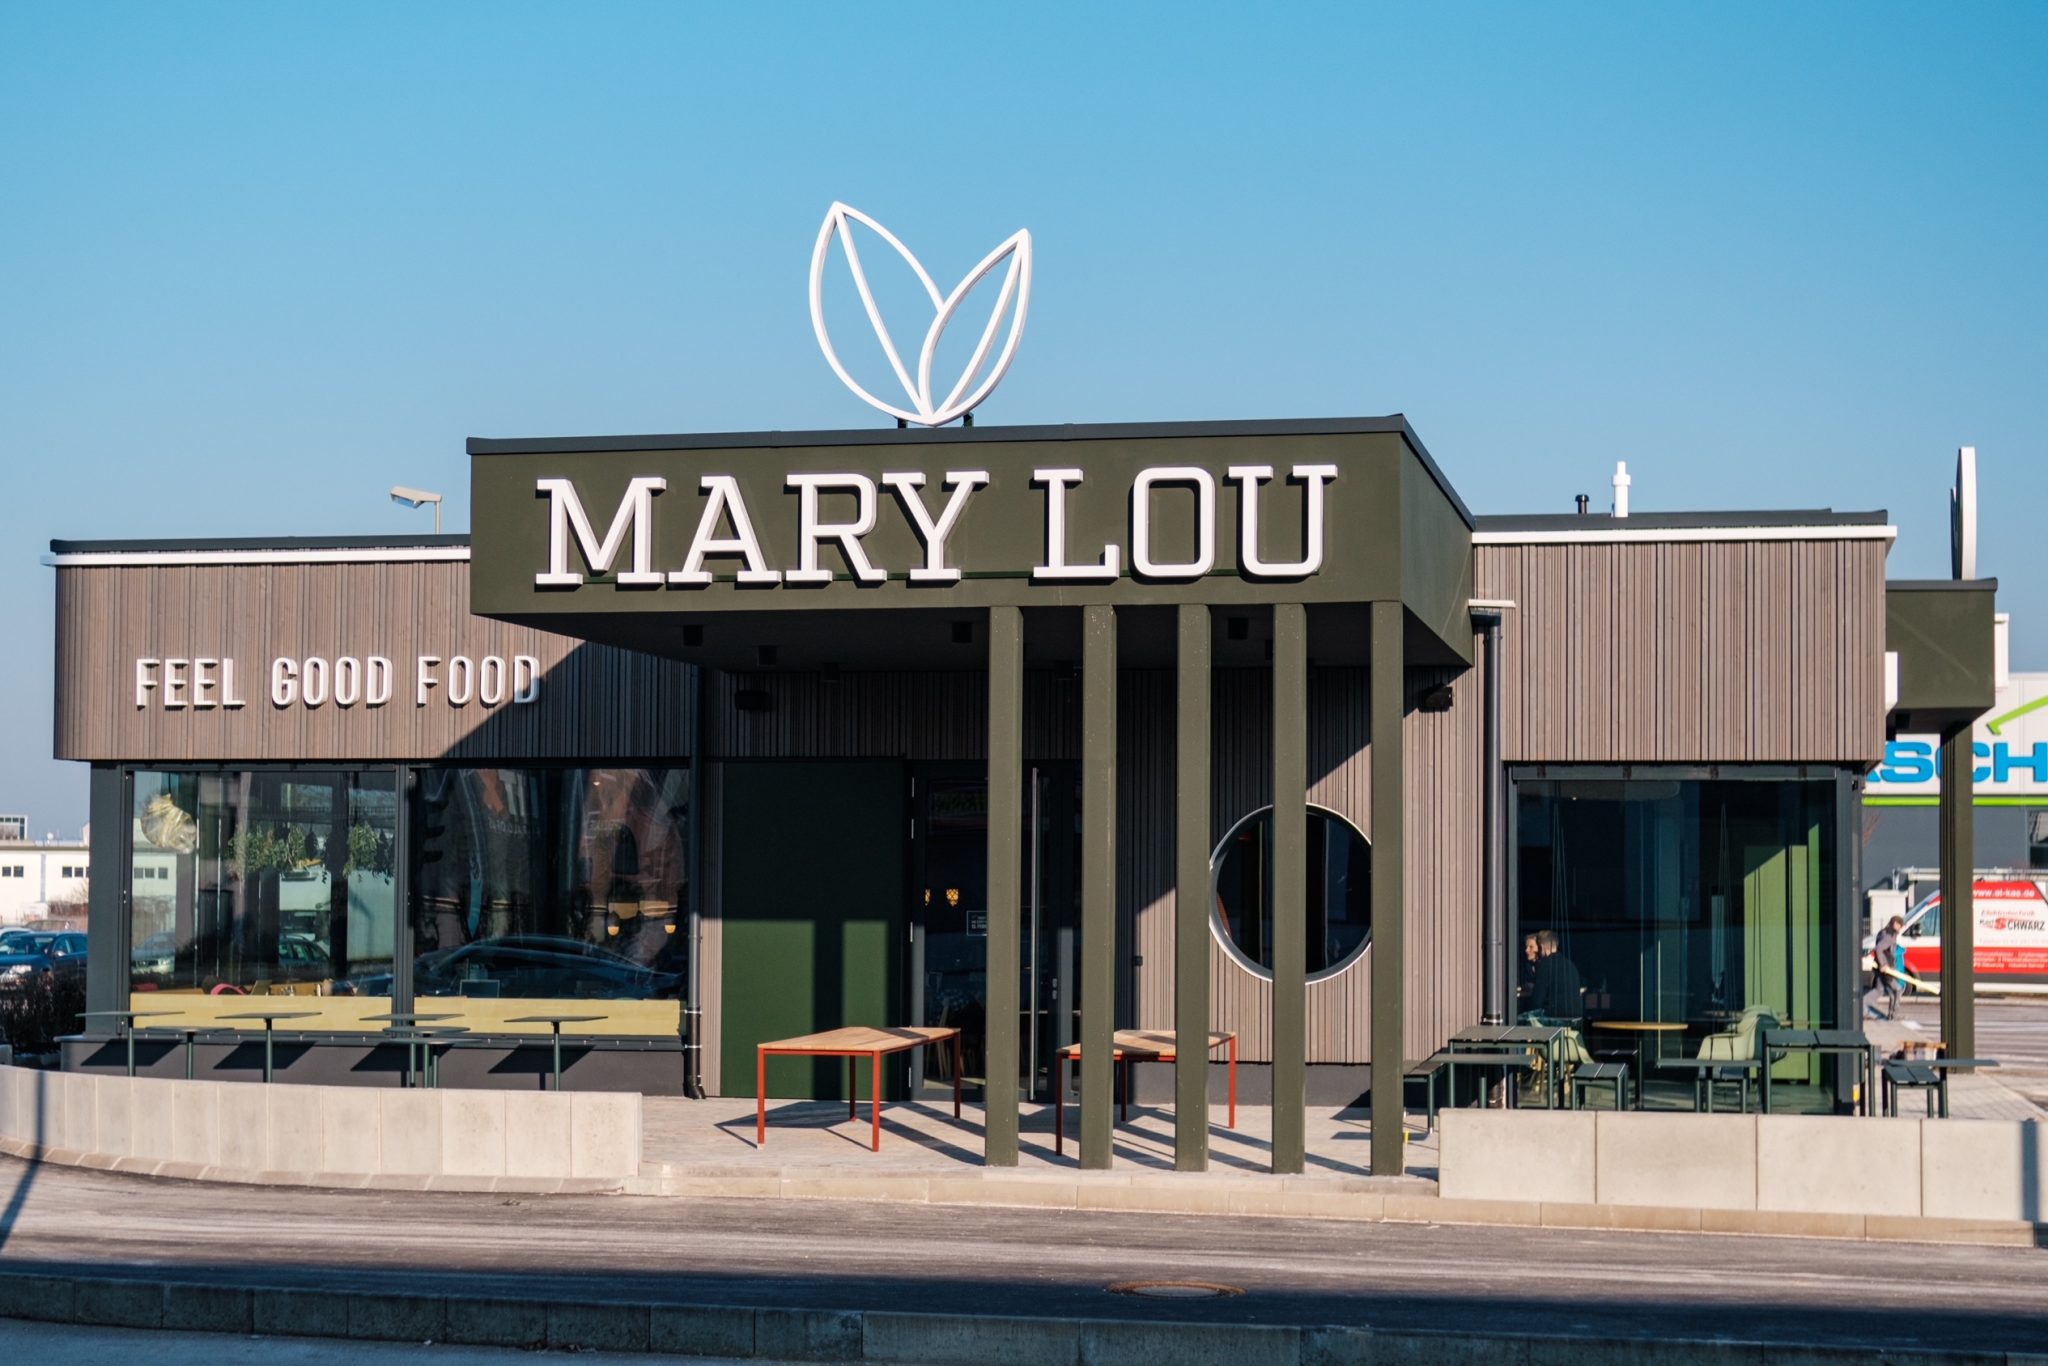 Mary Lou in Lechhausen